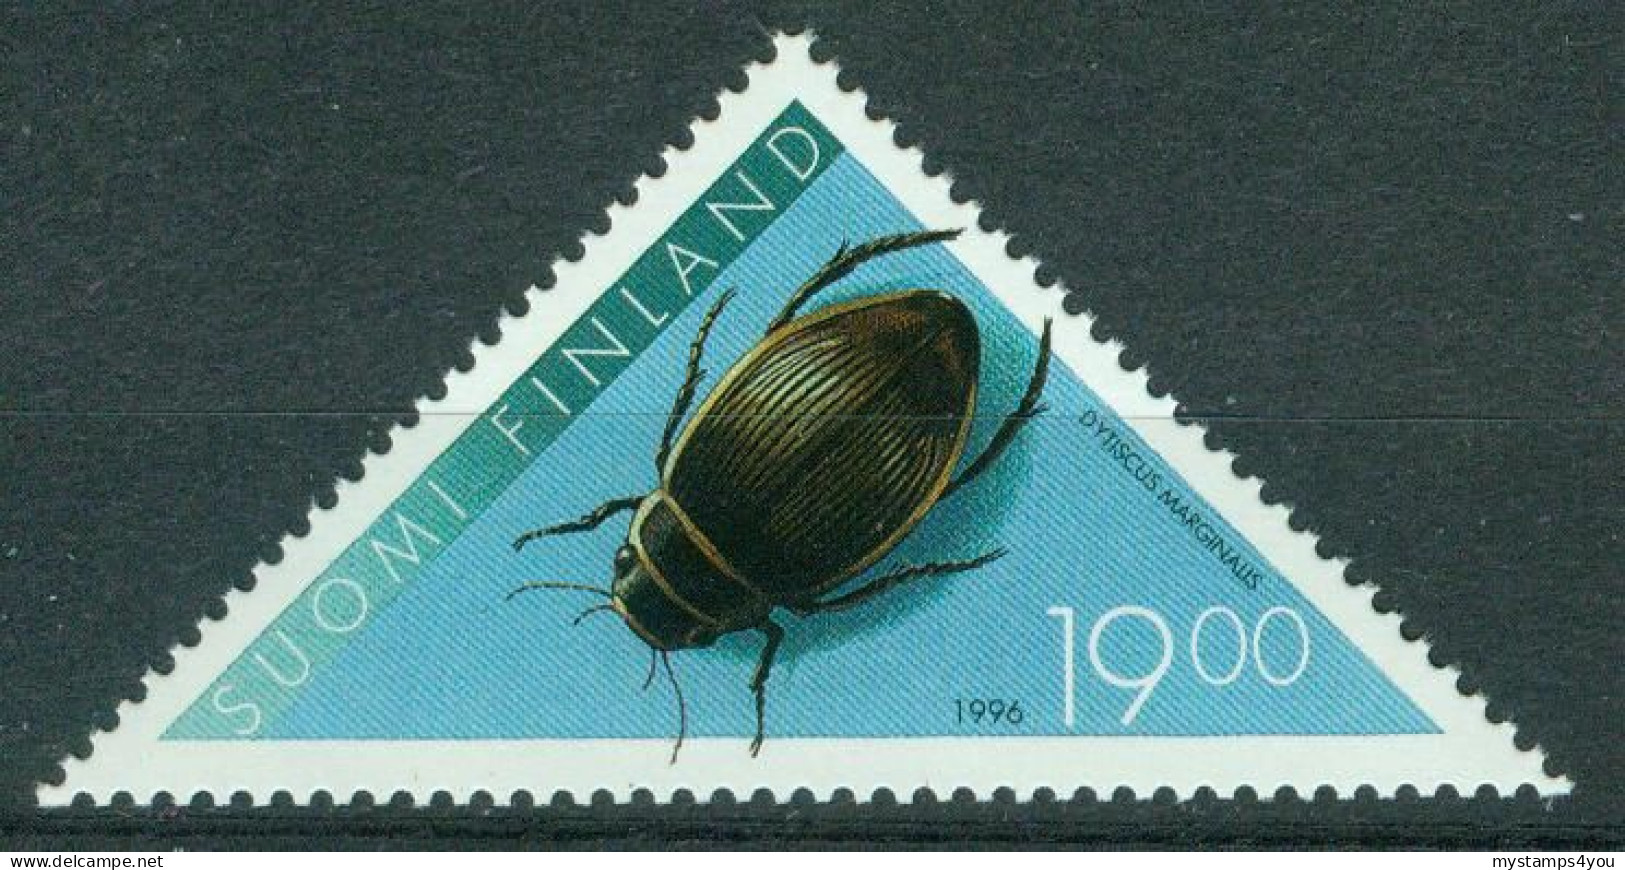 Bm Finland 1996 MiNr 1351 MNH | Great Diving Beetle #5-0216 - Neufs